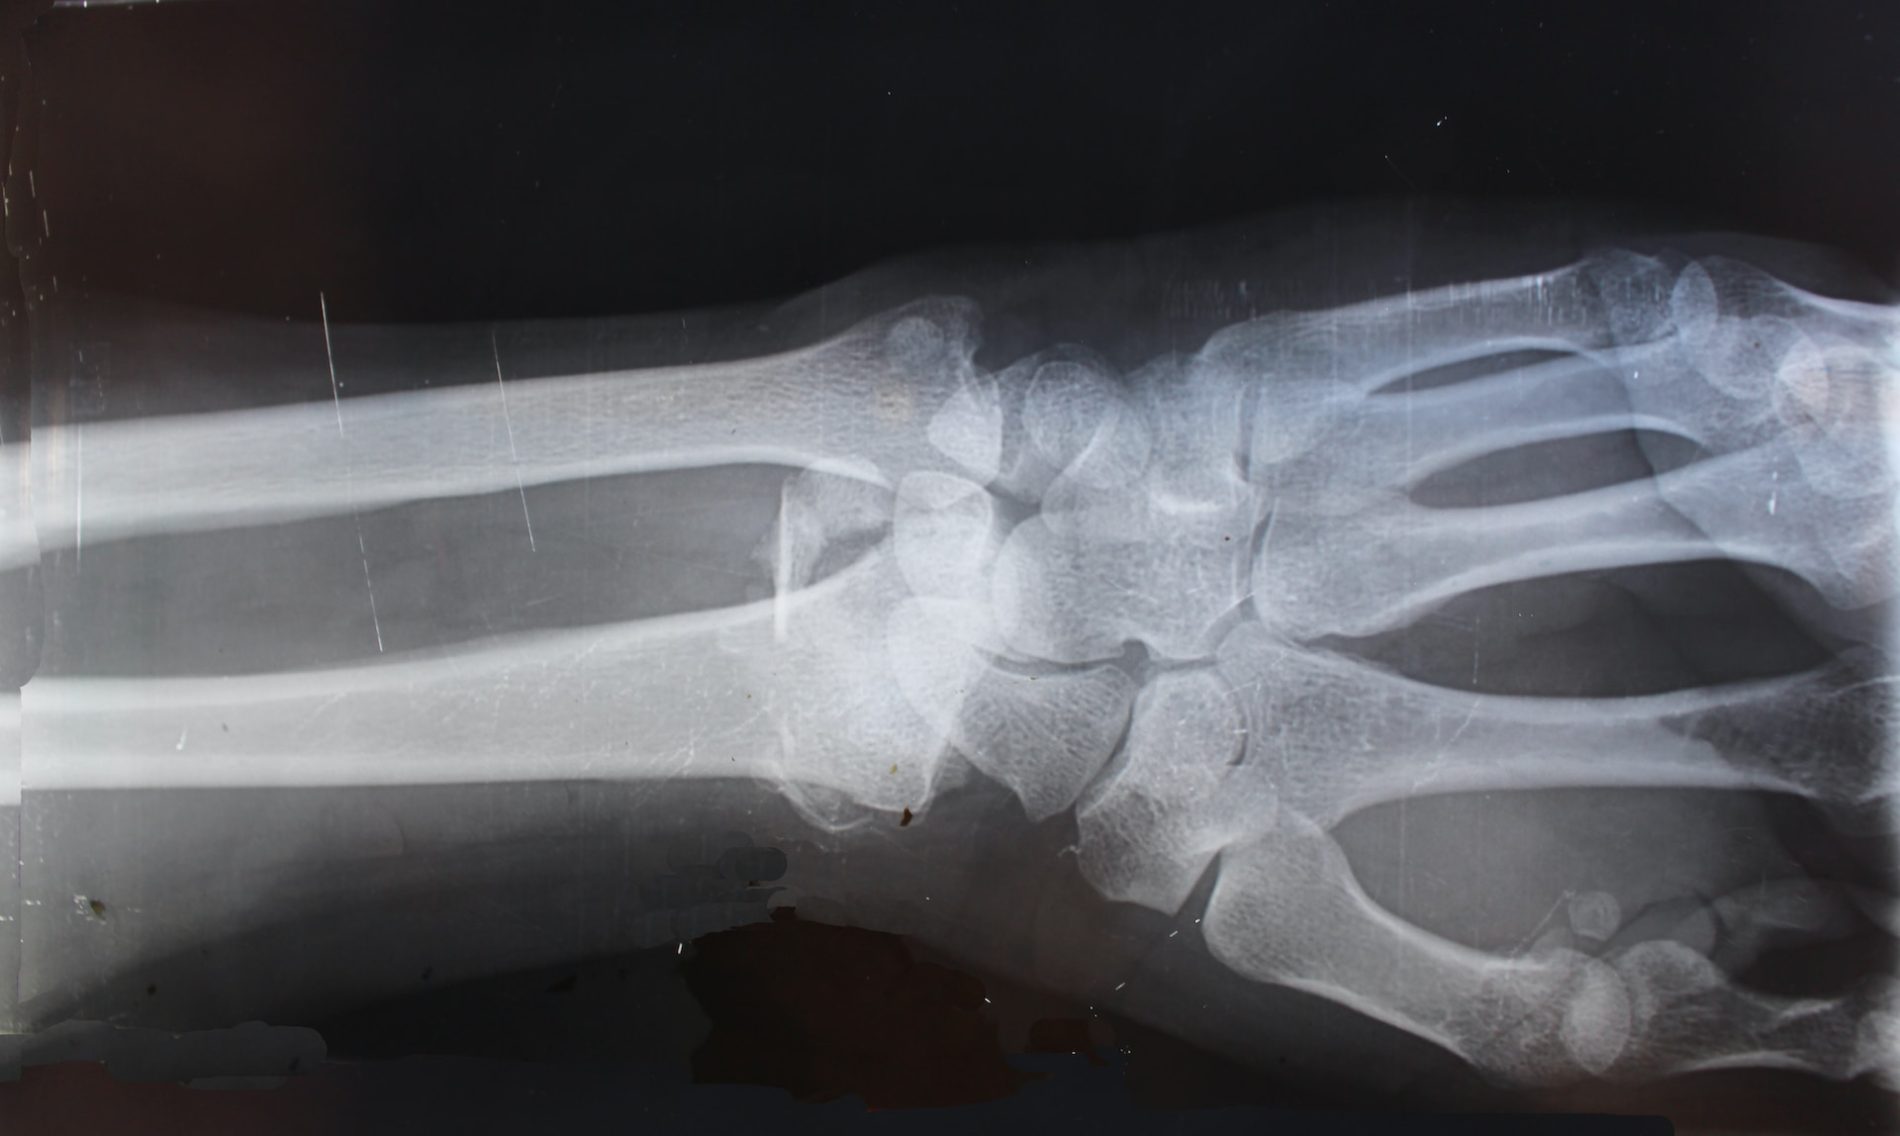 Röntgenaufnahme des Handgelenks